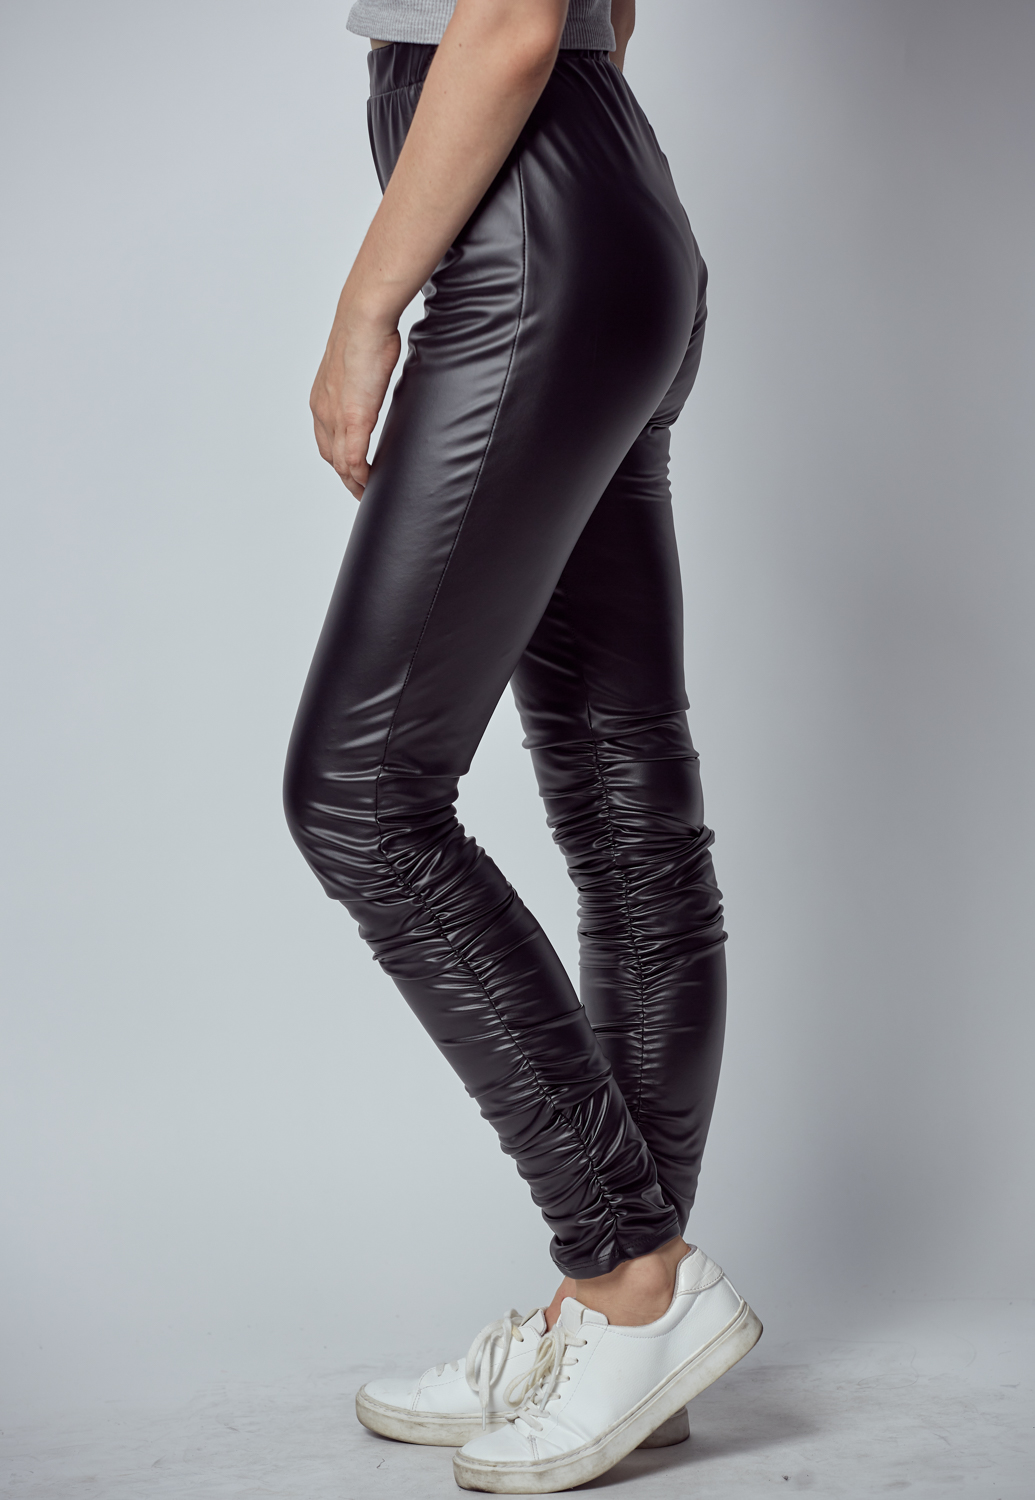 Wrinkled Tights Black Leather Pants | Shop Bottoms at Papaya Clothing